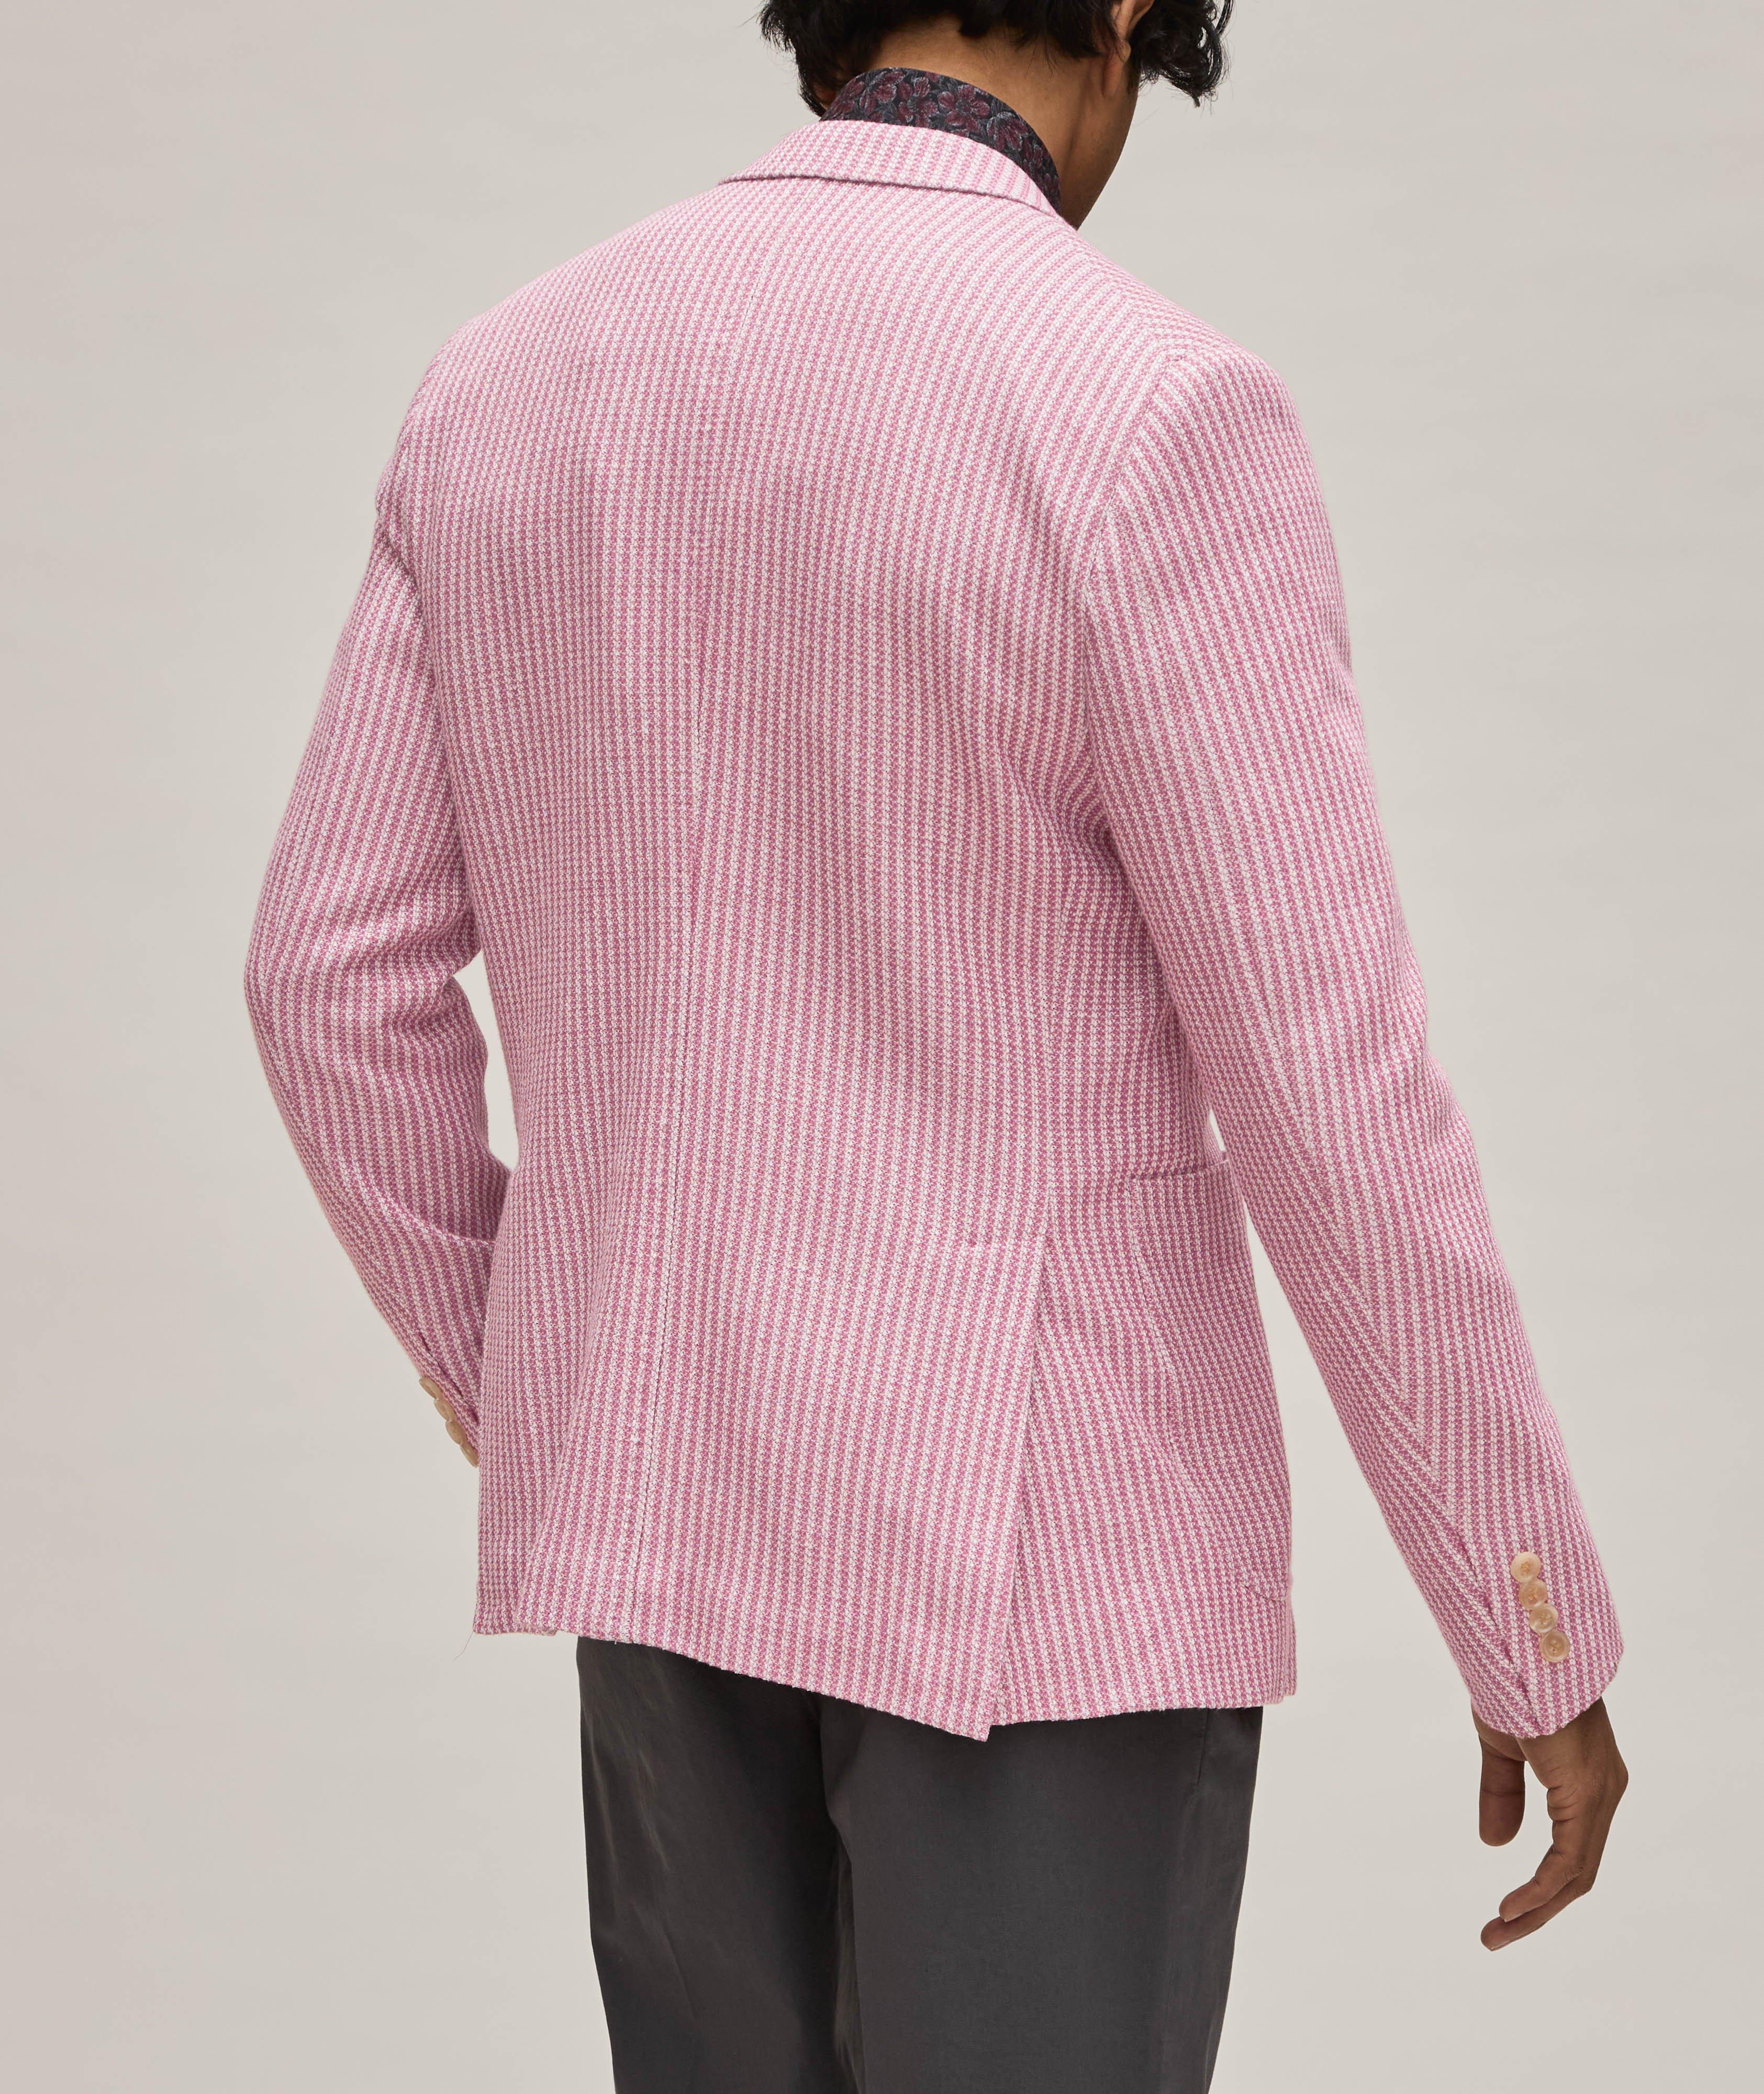 Capri Houndstooth Cotton-Blend Sport Jacket